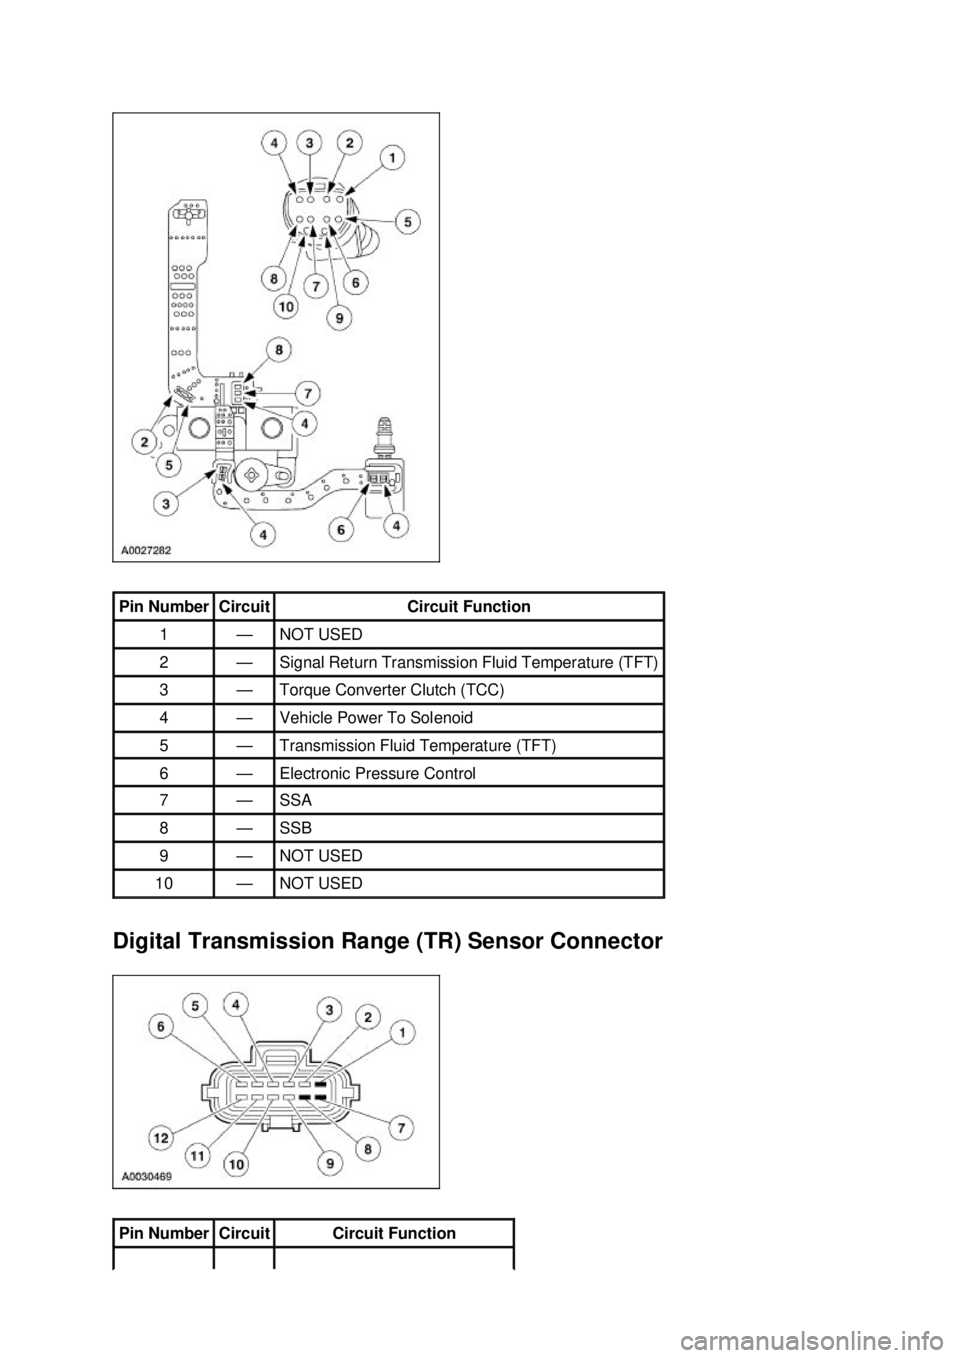 FORD MUSTANG 2003  Workshop Manual Digital Transmission Range (TR) Sensor Connector  Pin Number  Circuit  Circuit Function 
1  — NOT USED 
2  — Signal Return Transmission Fluid Temperature (TFT) 
3  — Torque Converter Clutch (TCC